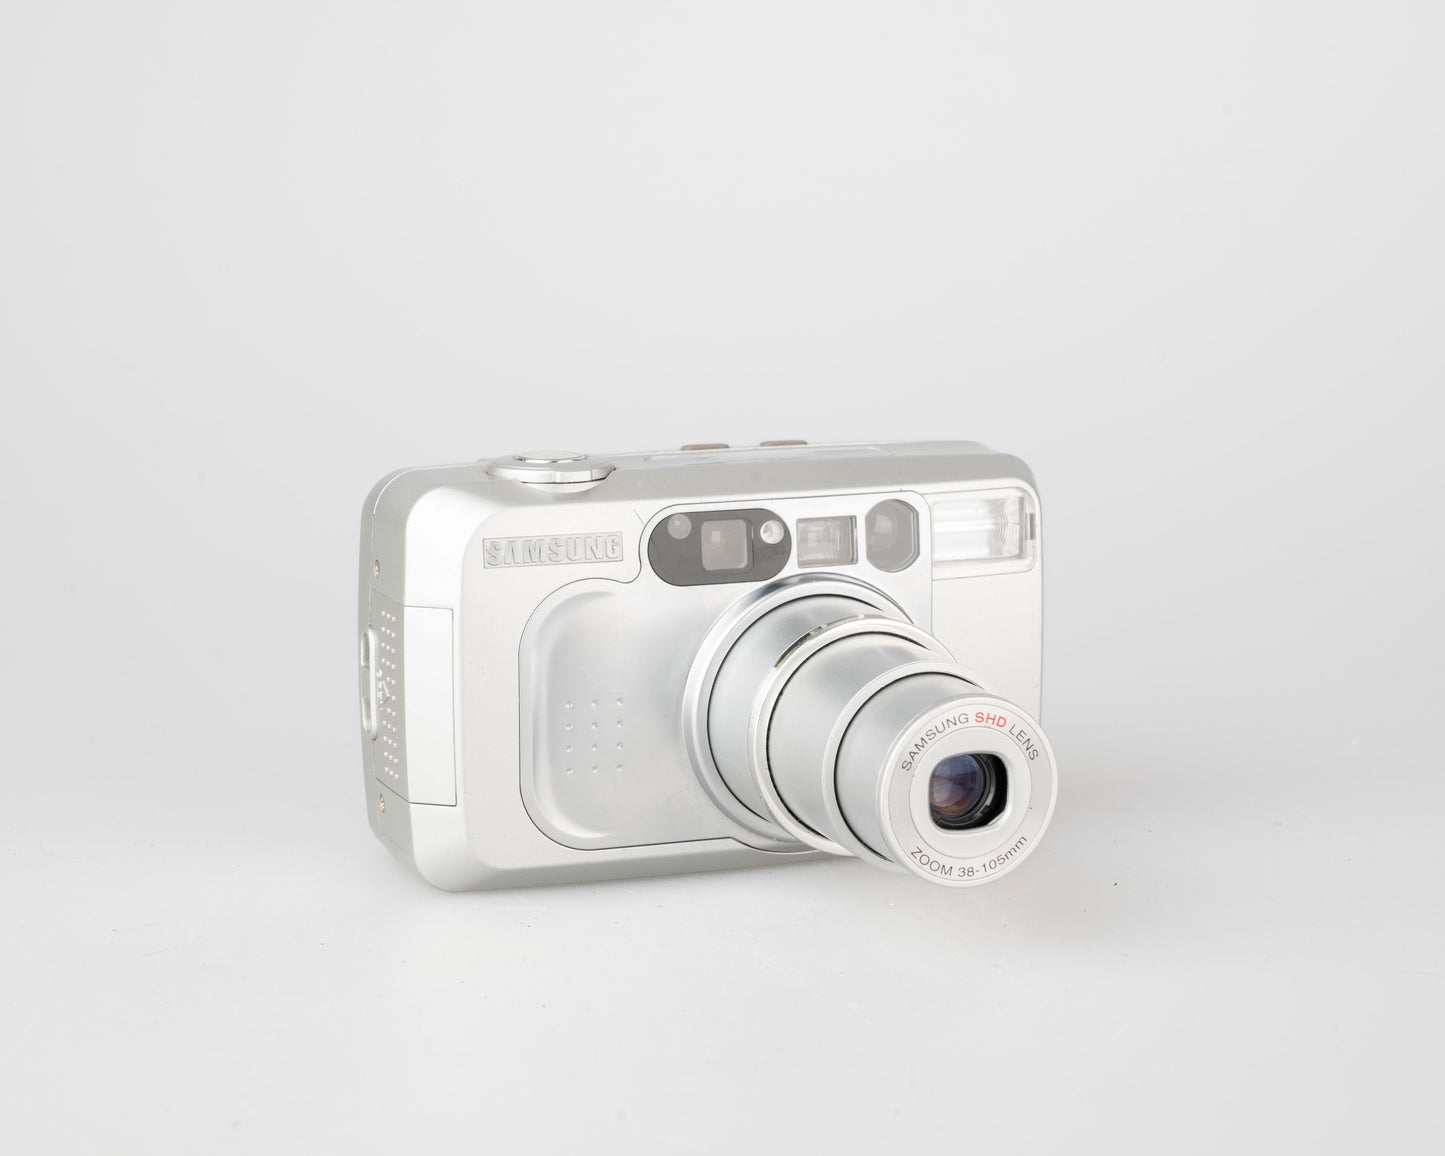 Samsung Maxima Zoom 105 Ti compact 35mm camera (serial 92526788)